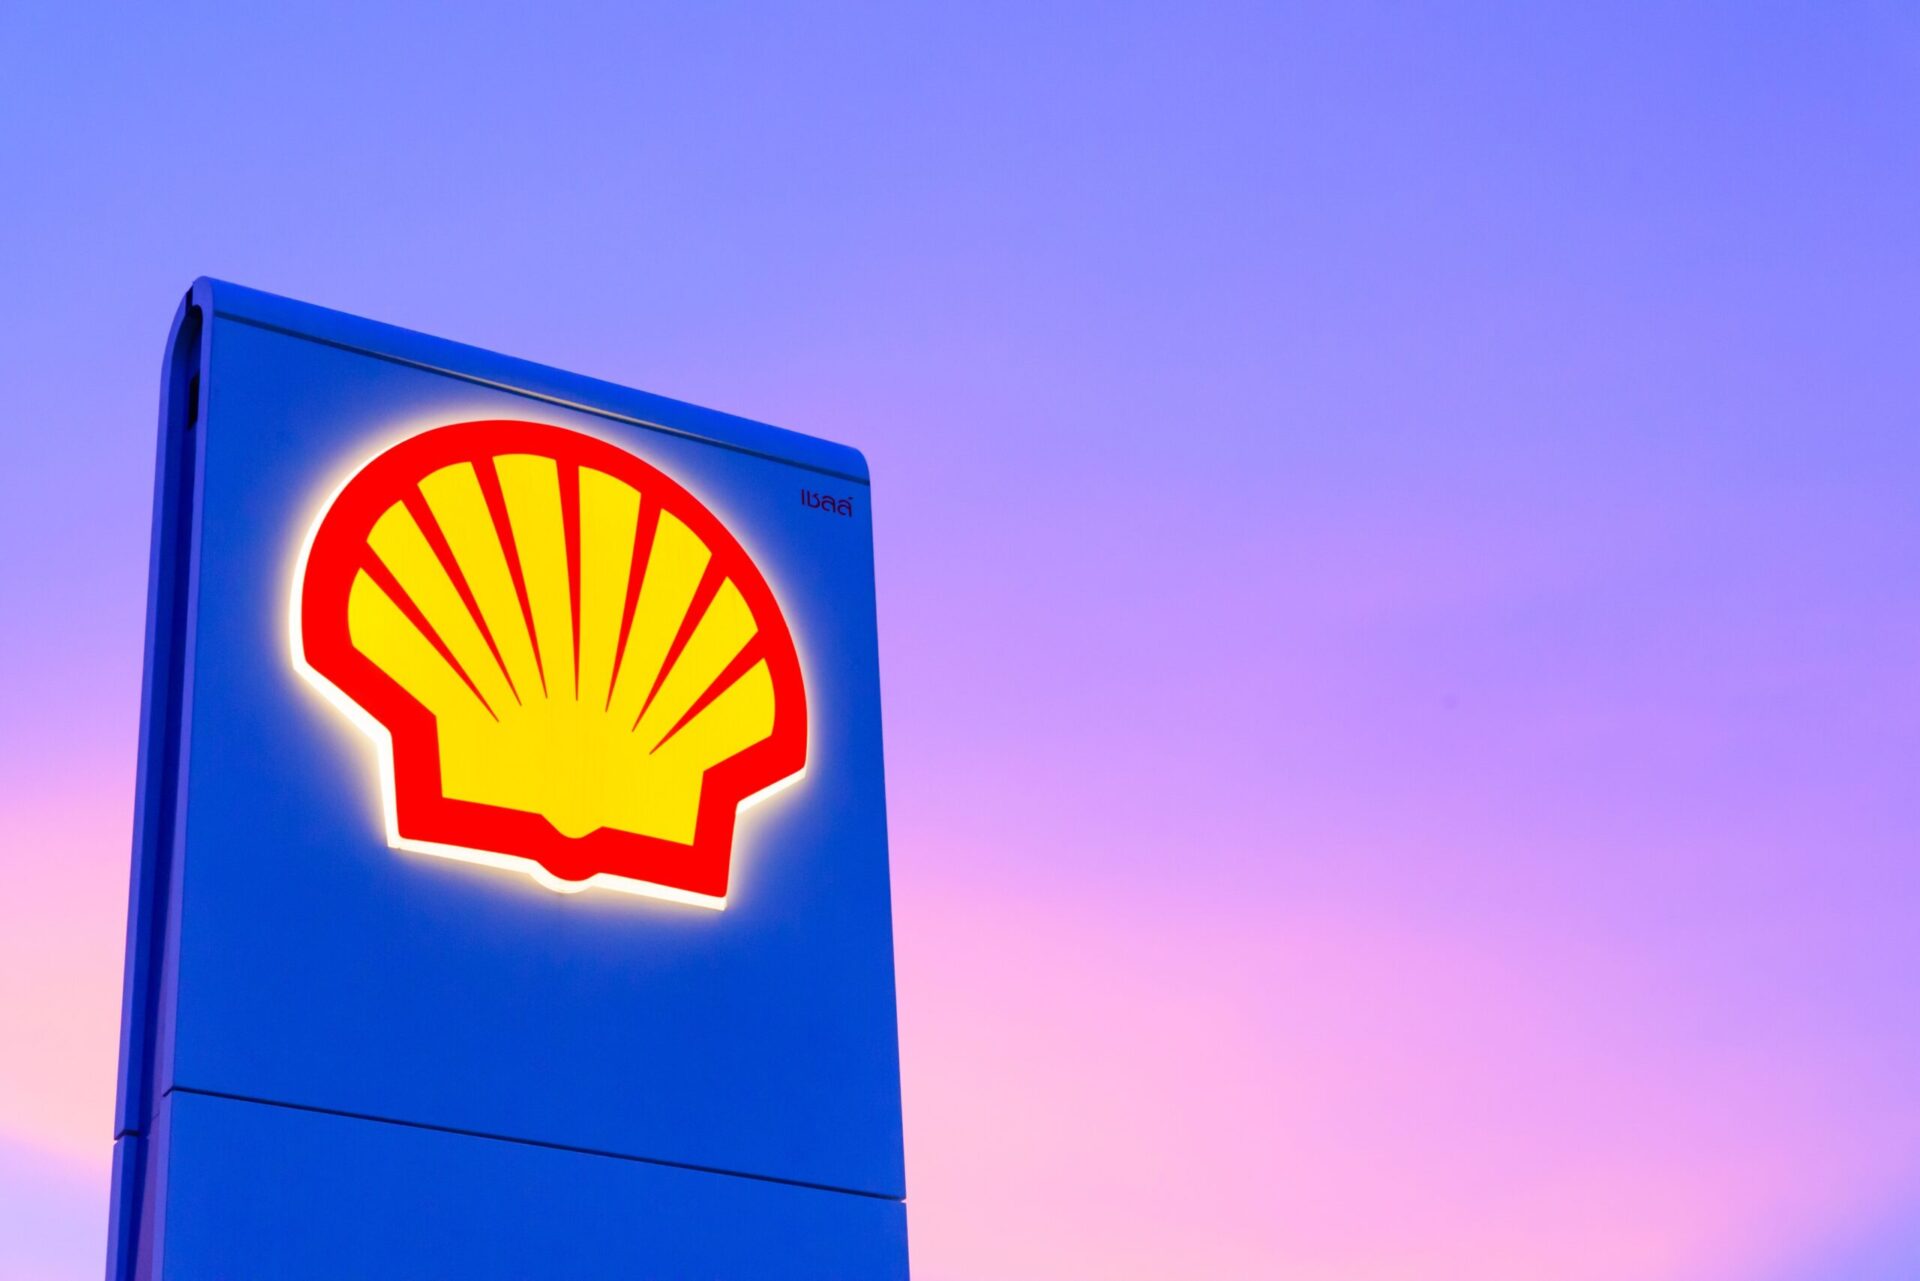 Shell Corporation Legacy | The Brand Hopper